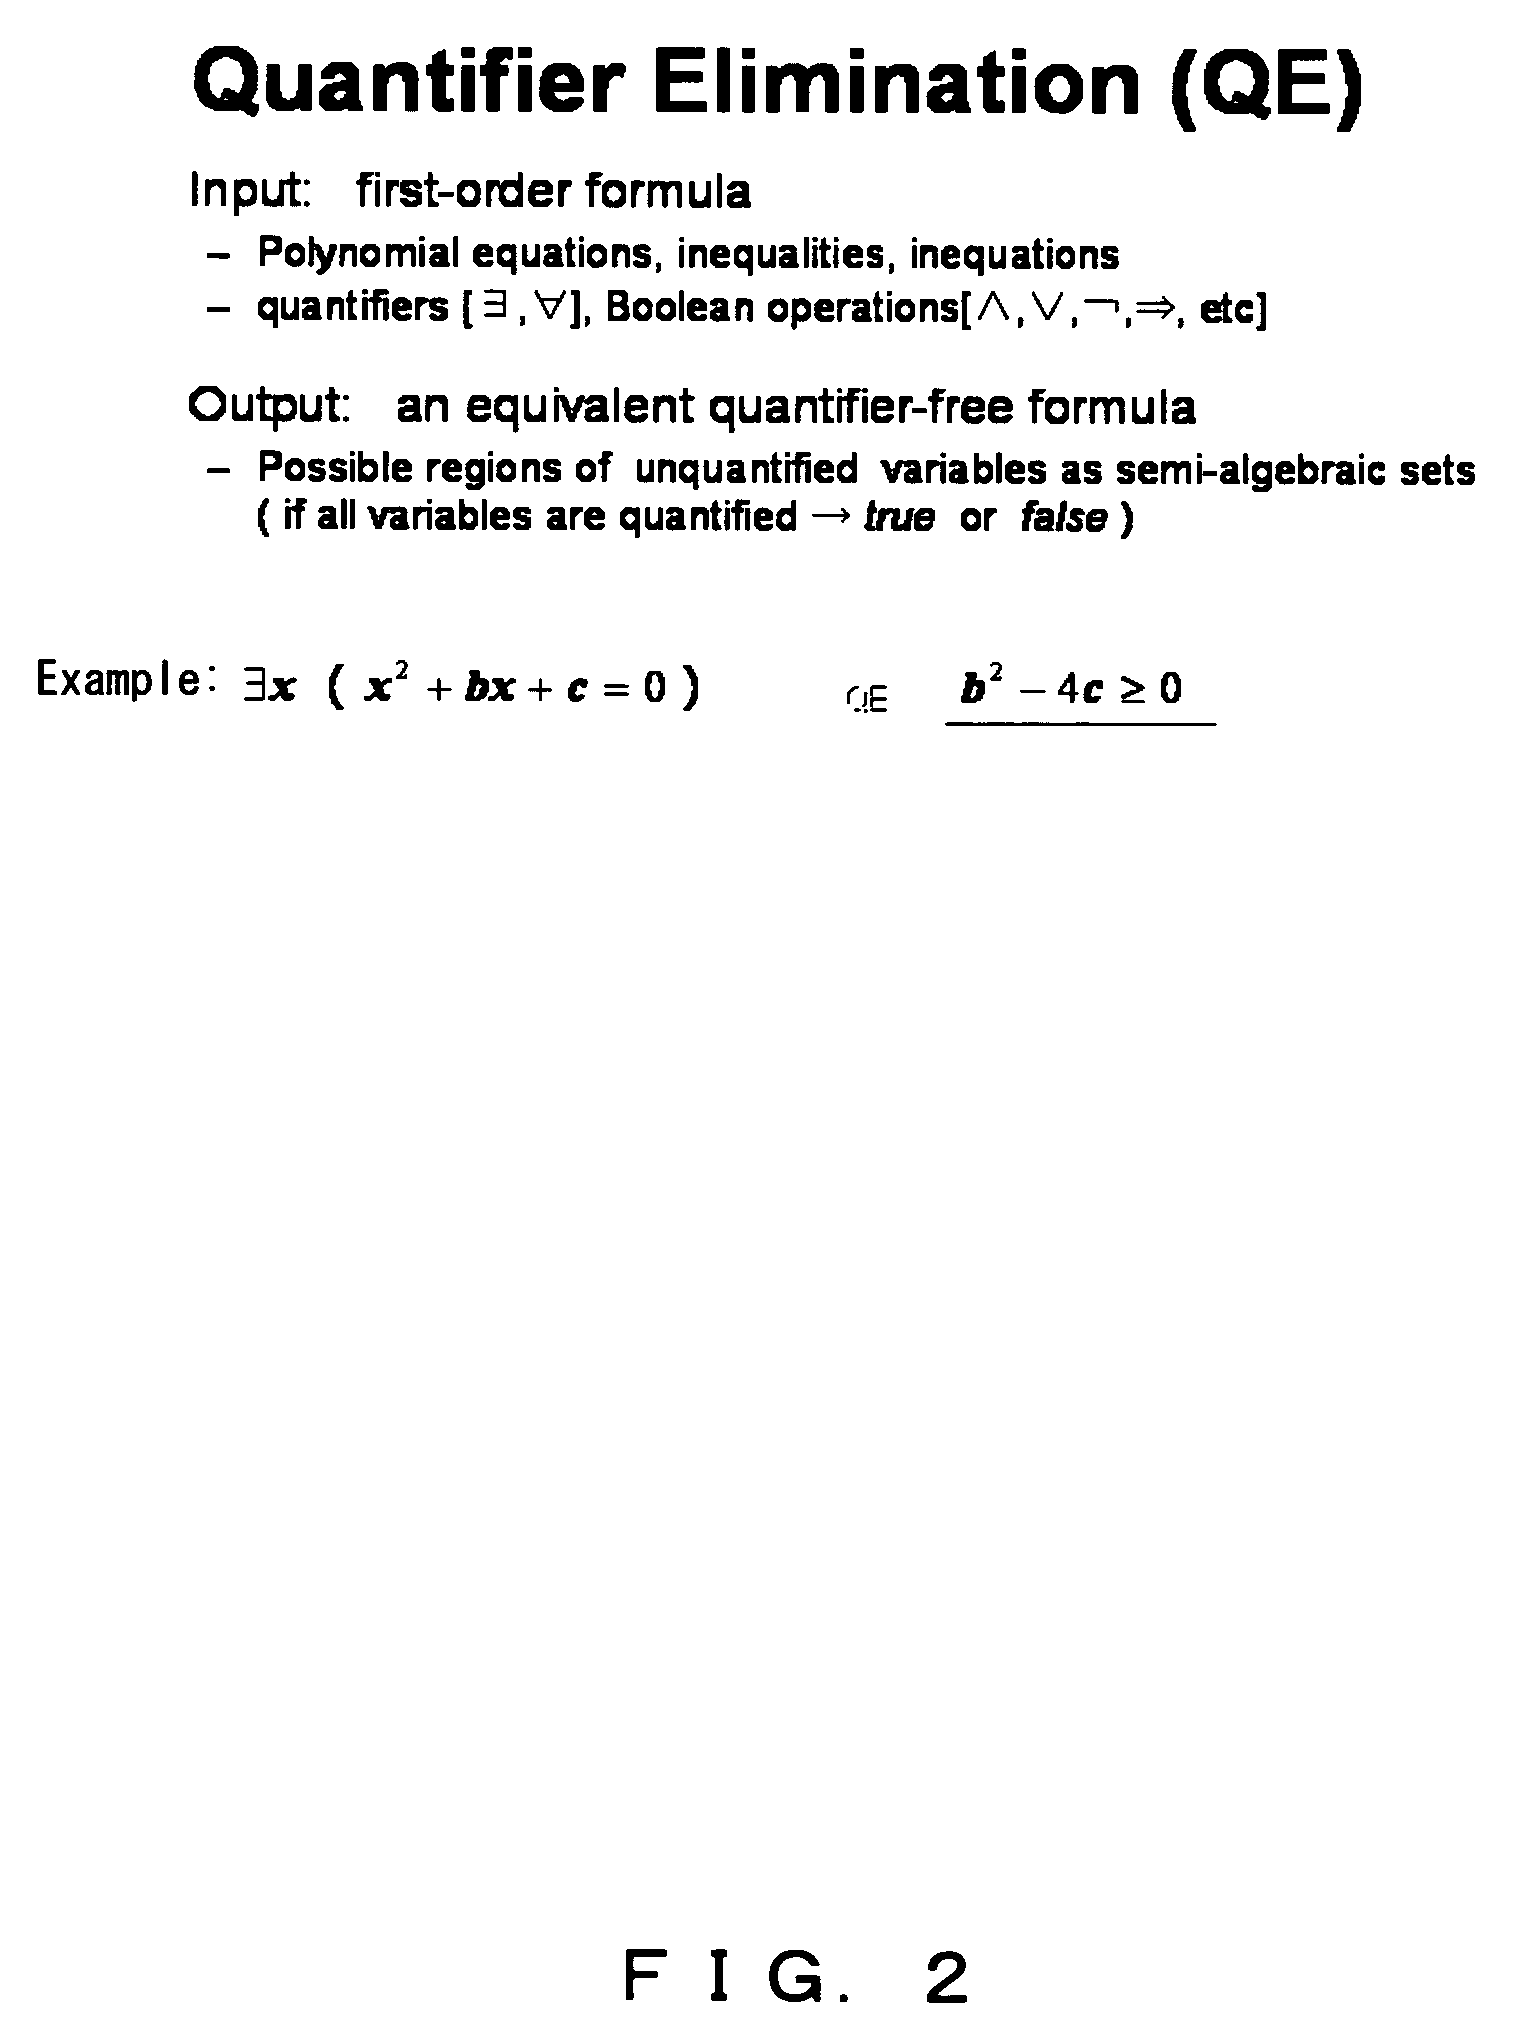 Accuracy verification program for model parameter computation using a quantifier elimination method